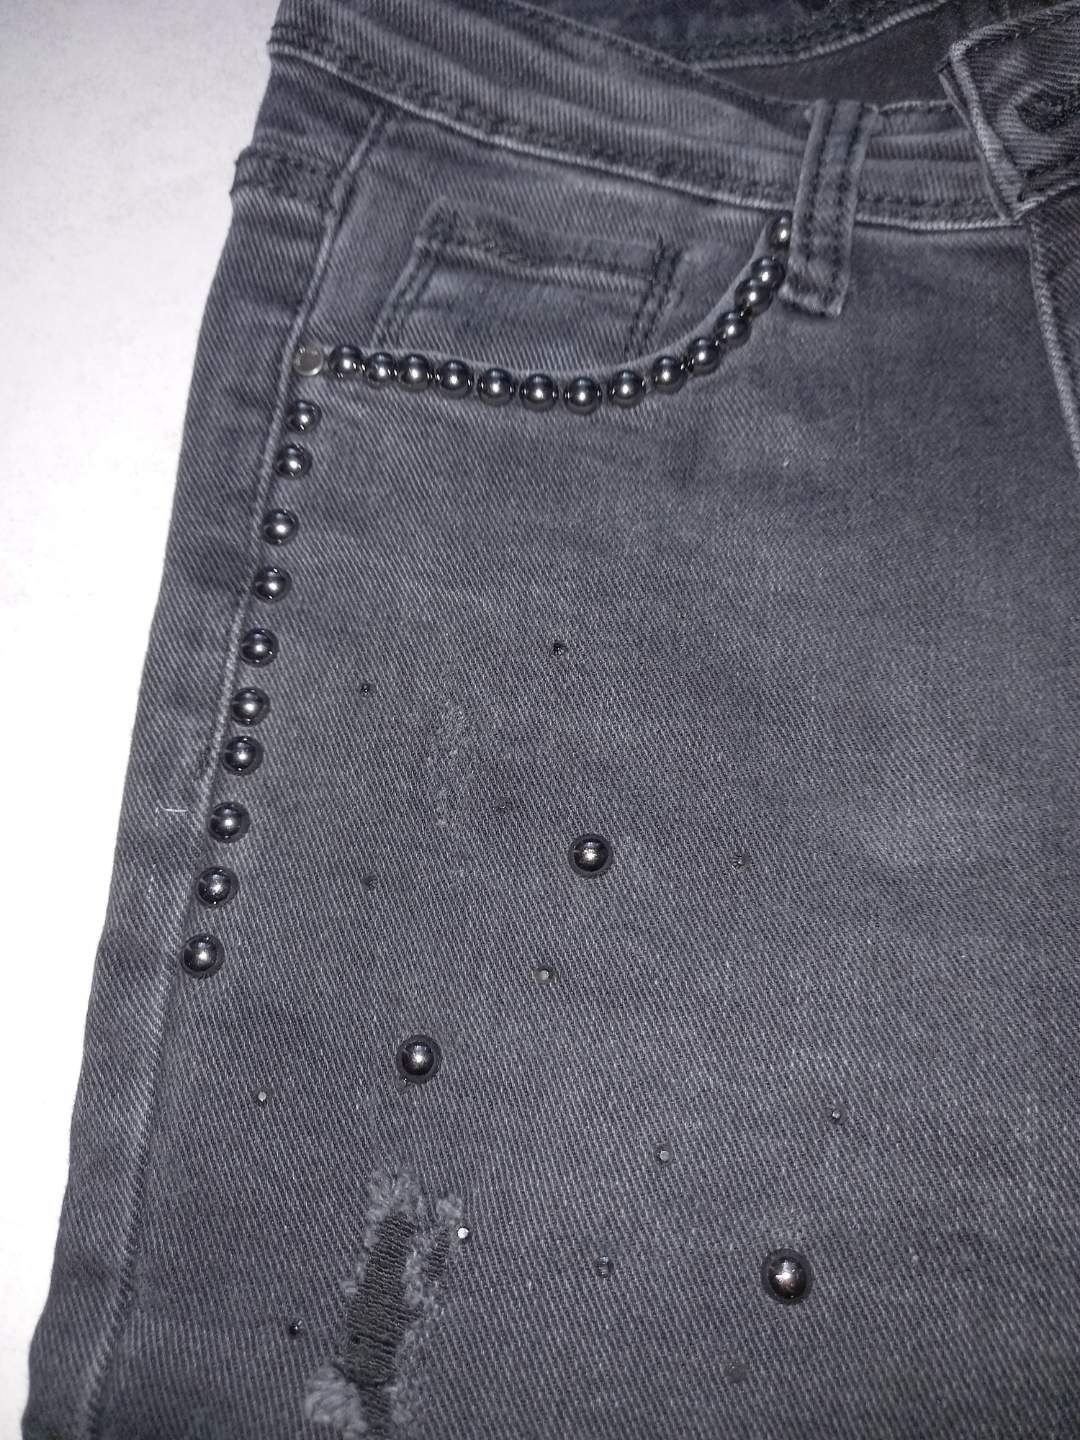 Spodnie damskie jeansy Daysie rozmiar 38